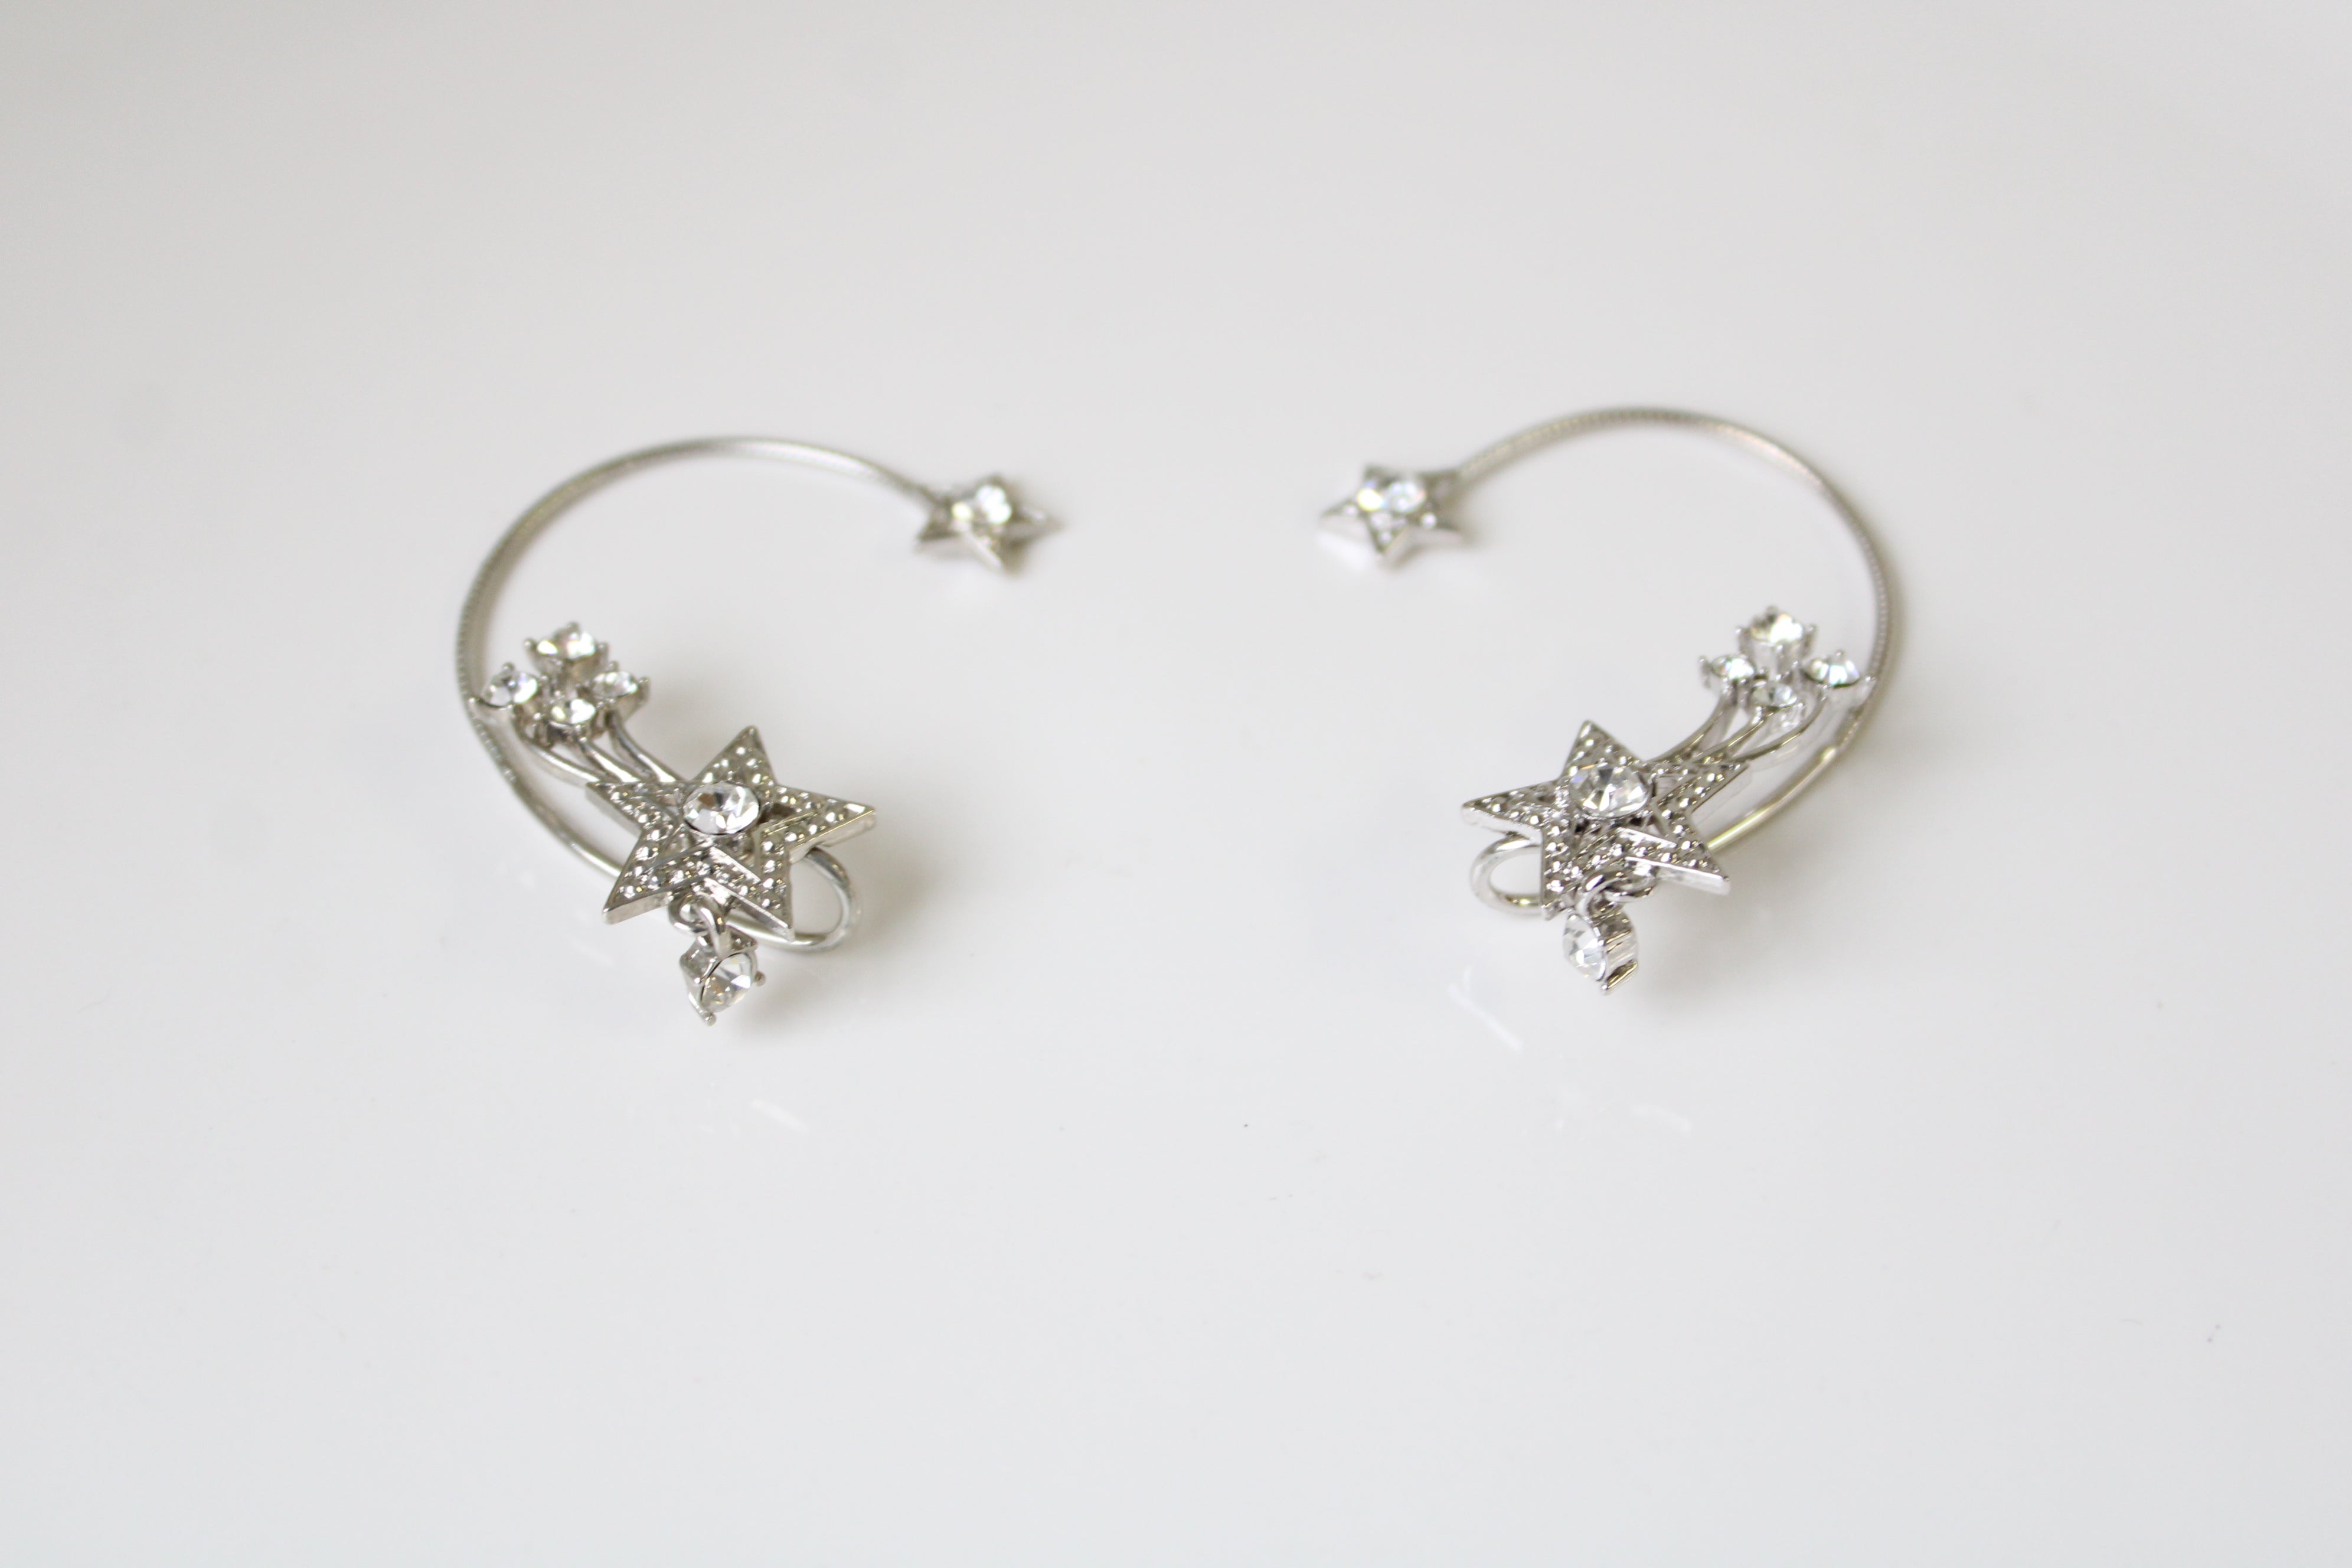 Avon Star Silver Cuff Ear Pieces